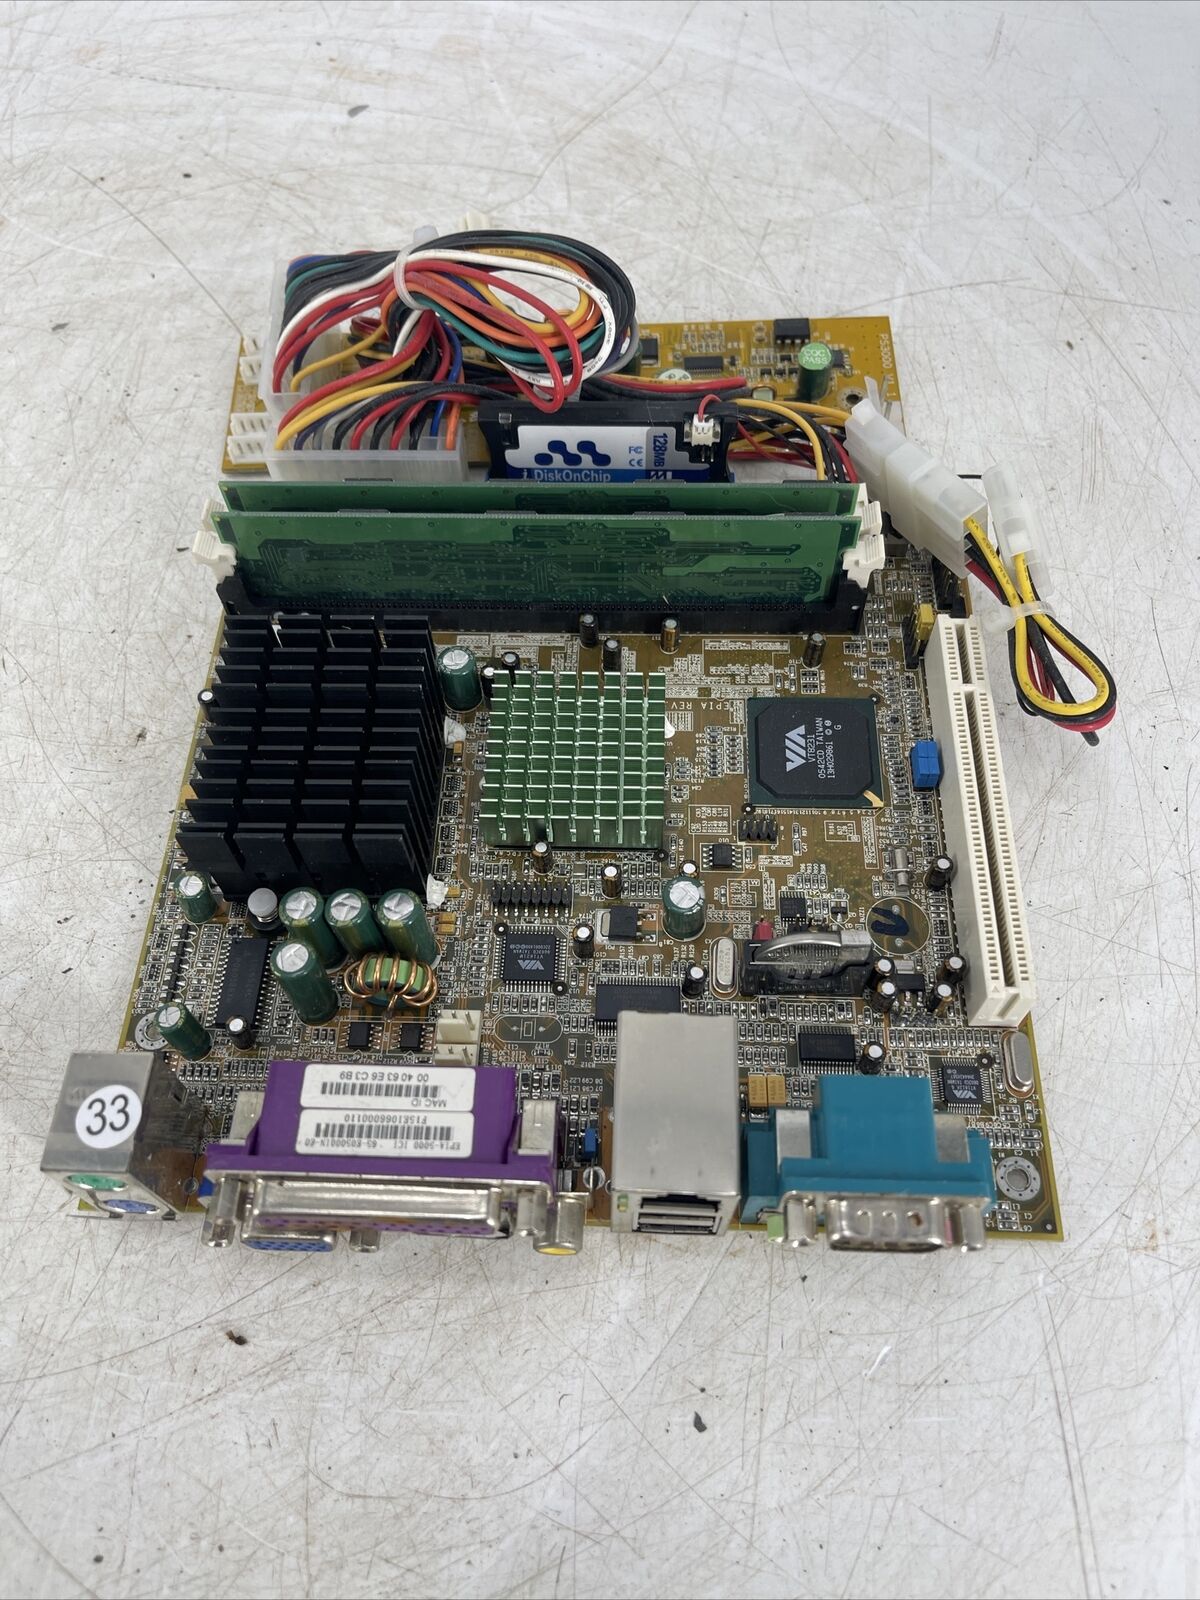  EPIA-5000 ITI Industrial PC Motherboard